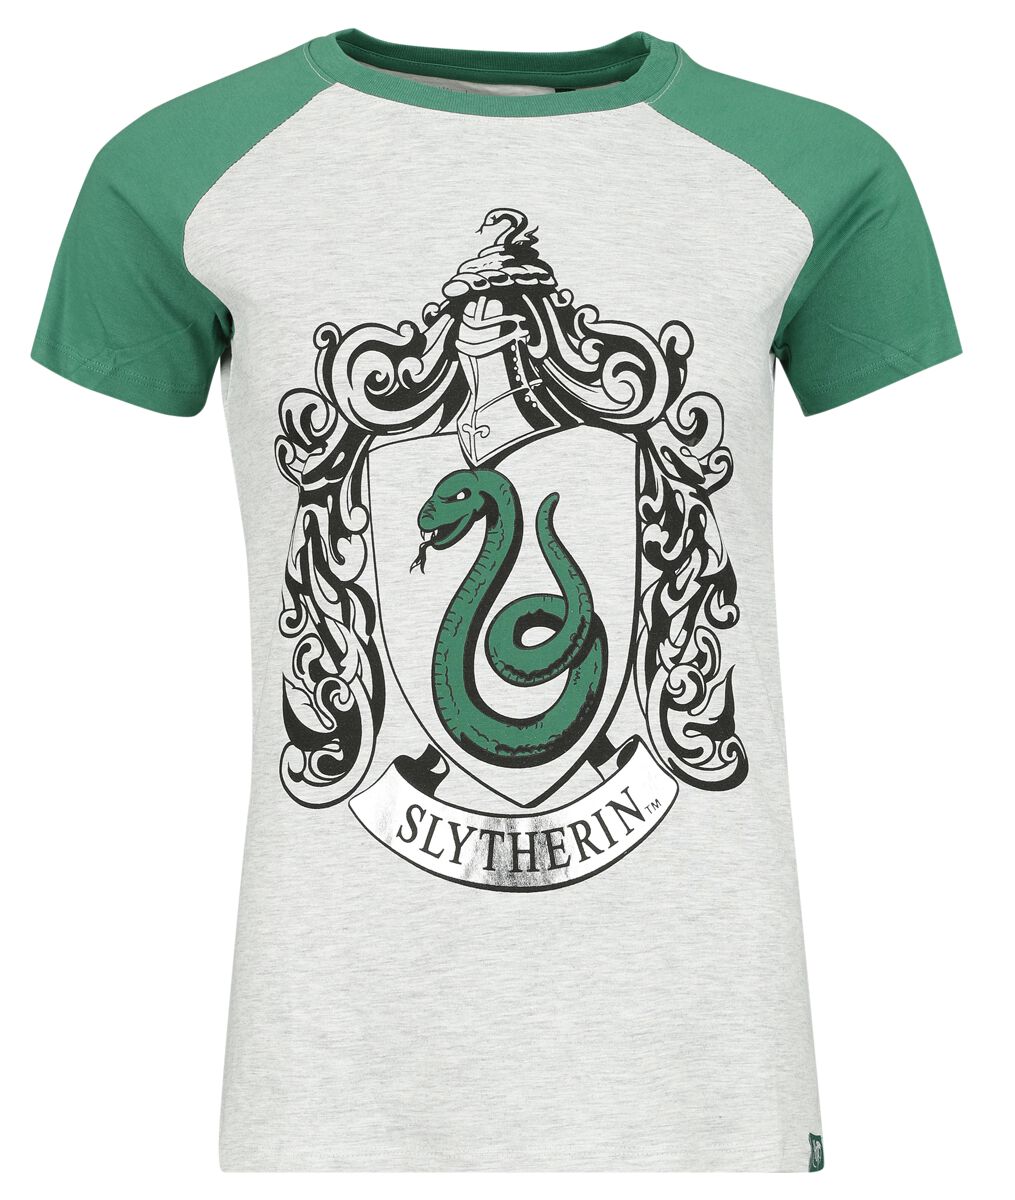 Harry Potter Slytherin Silver T-Shirt grün grau in L